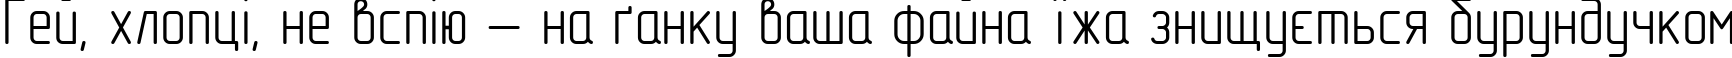 Пример написания шрифтом GOST Type AU текста на украинском